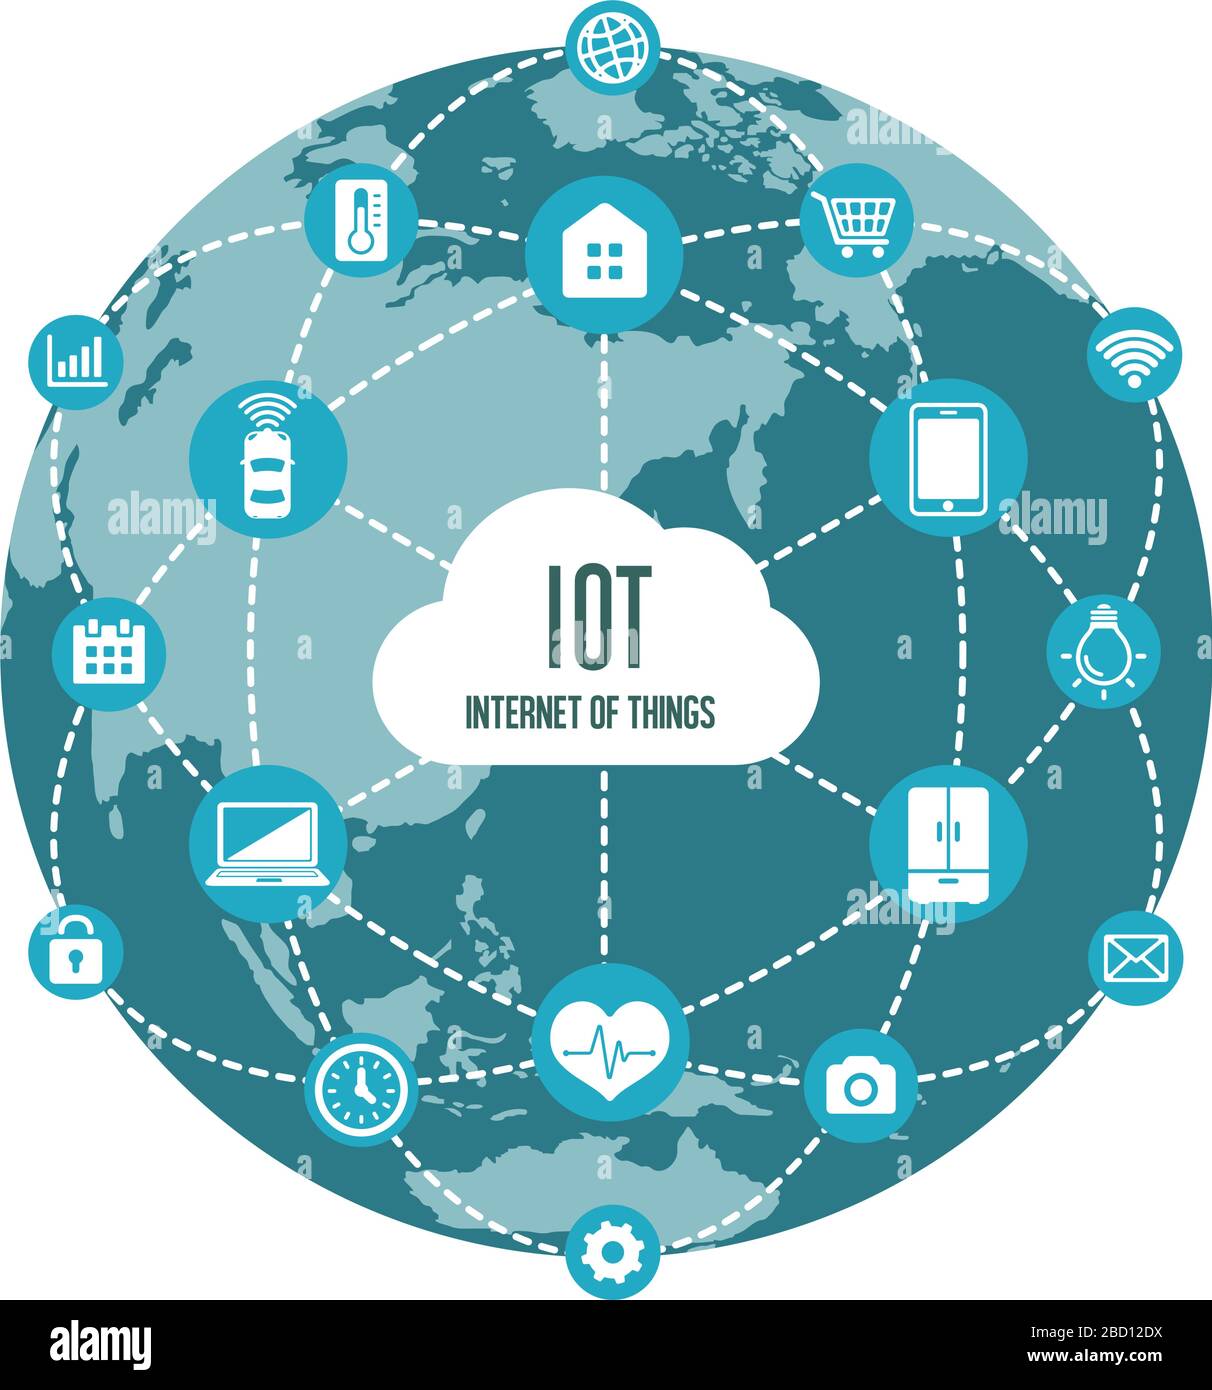 IoT ( Internet of Things ) Bild Illustration / Earth Stock Vektor